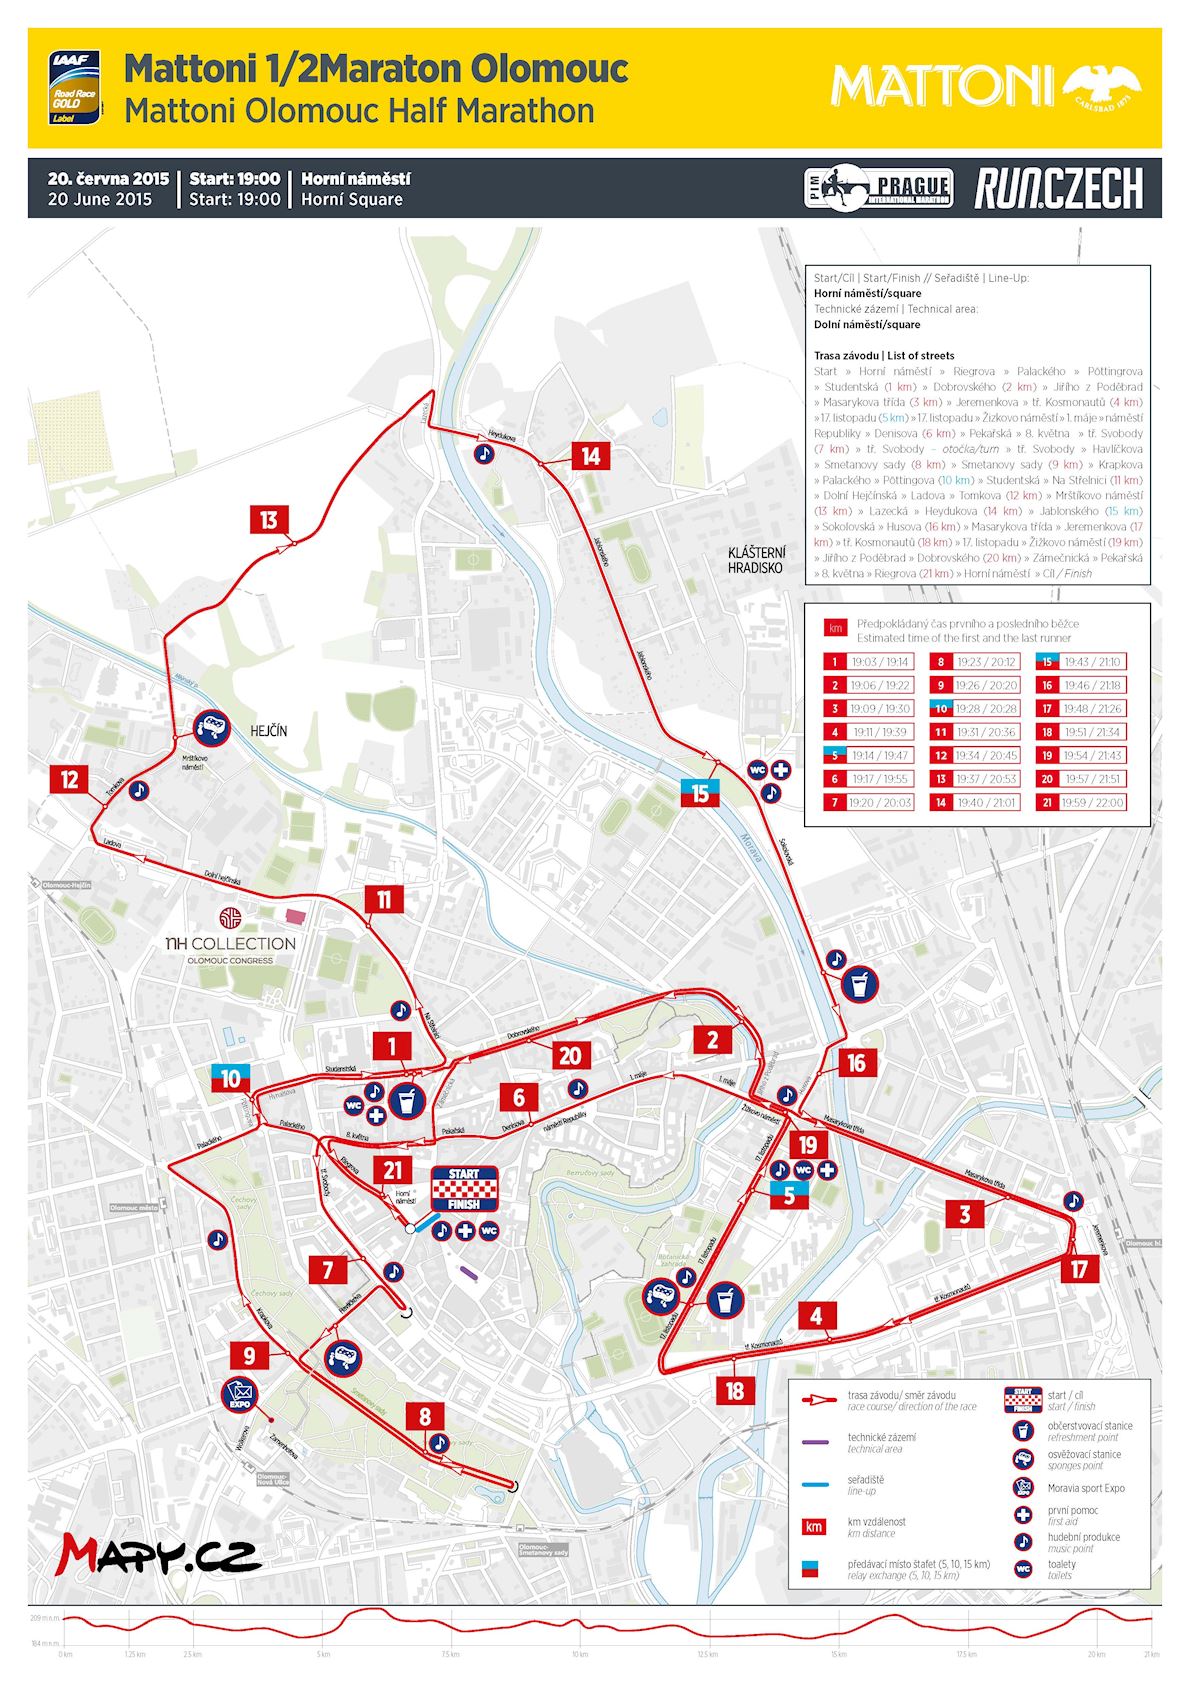 Mattoni Olomouc Half Marathon Routenkarte